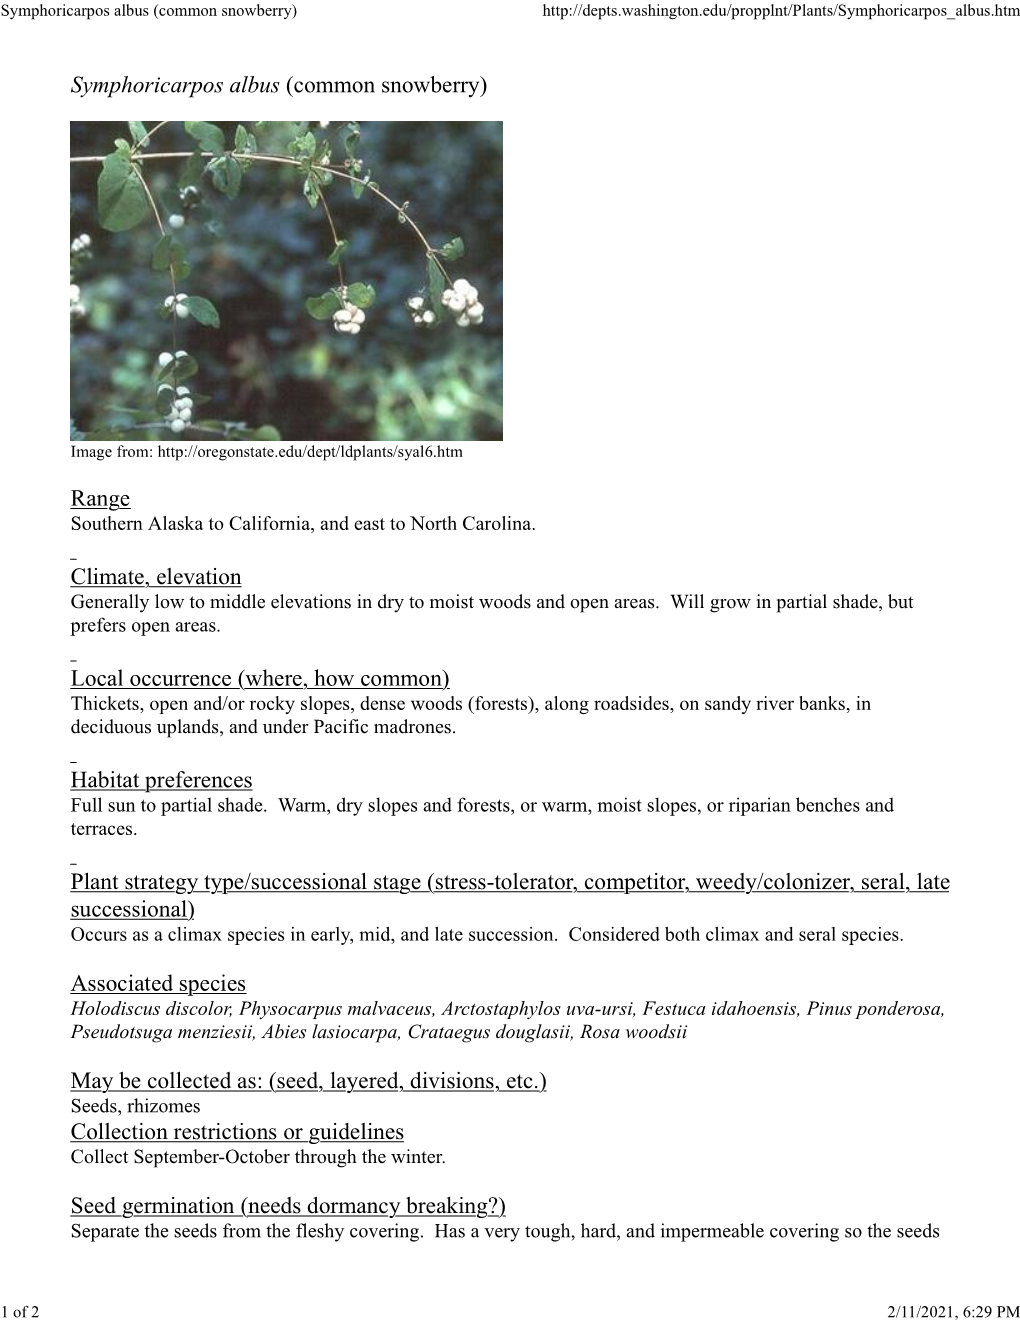 Symphoricarpos Albus (Common Snowberry)